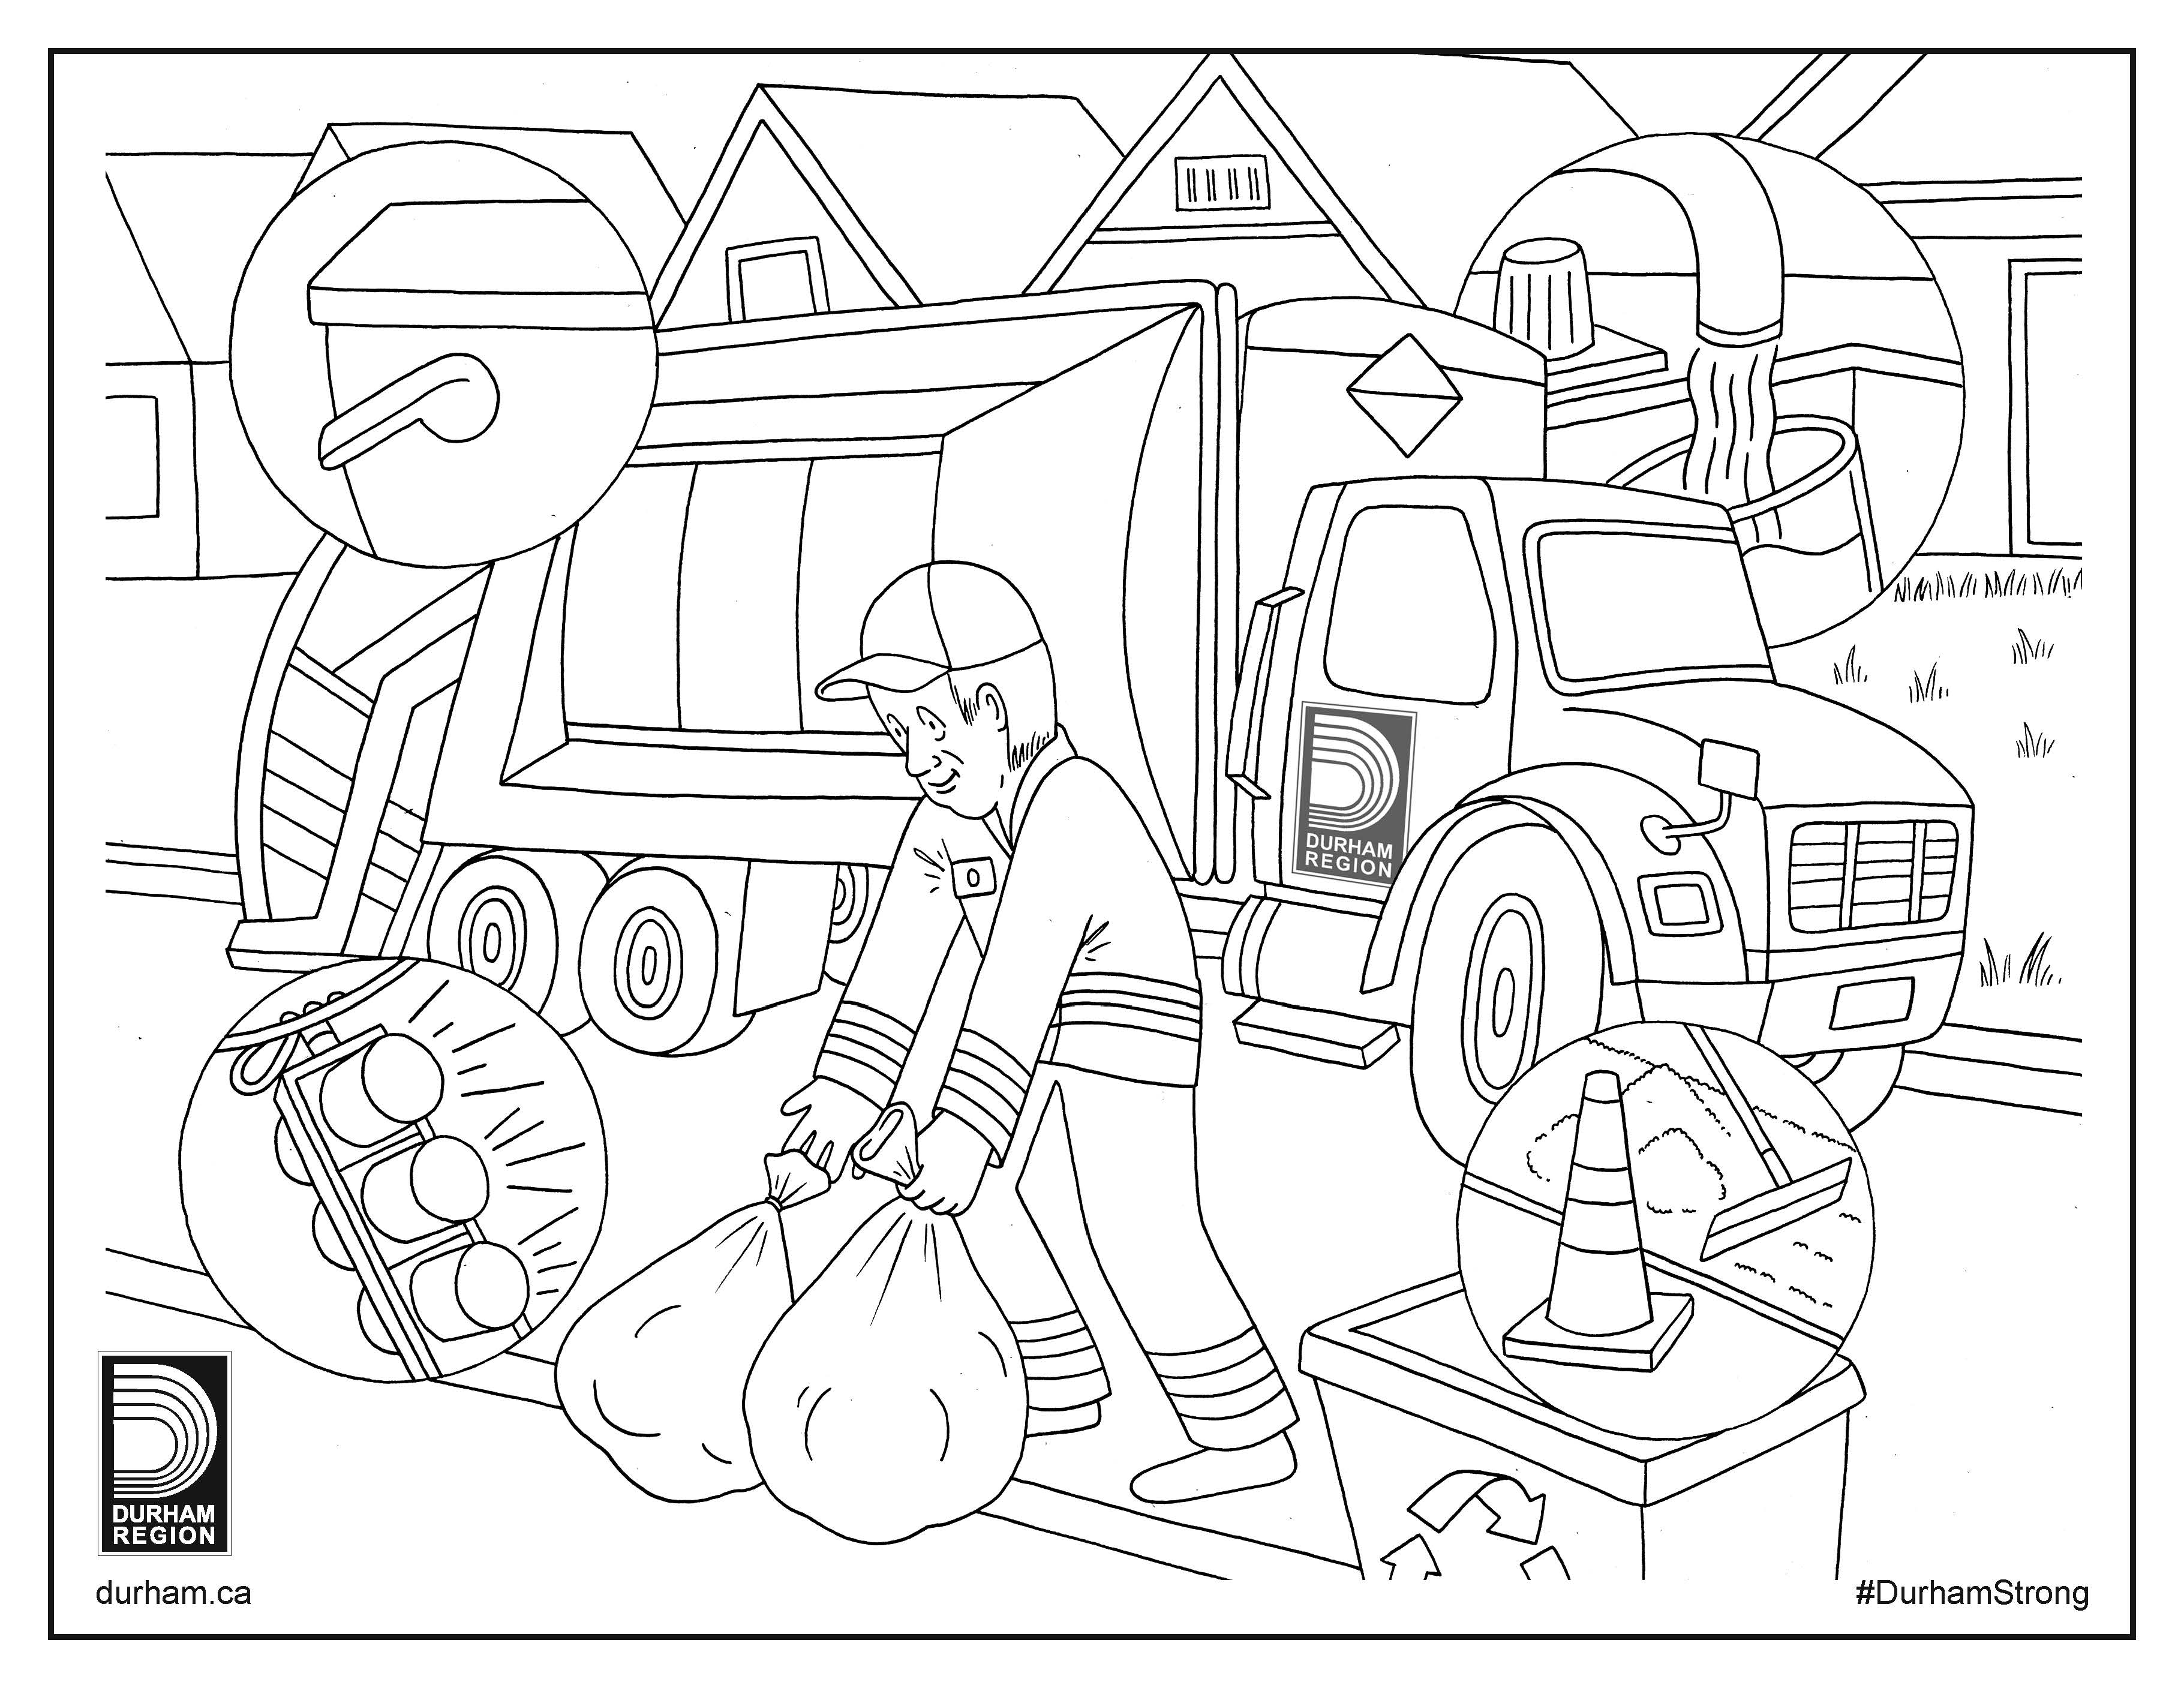 Illustration of garbage trucks